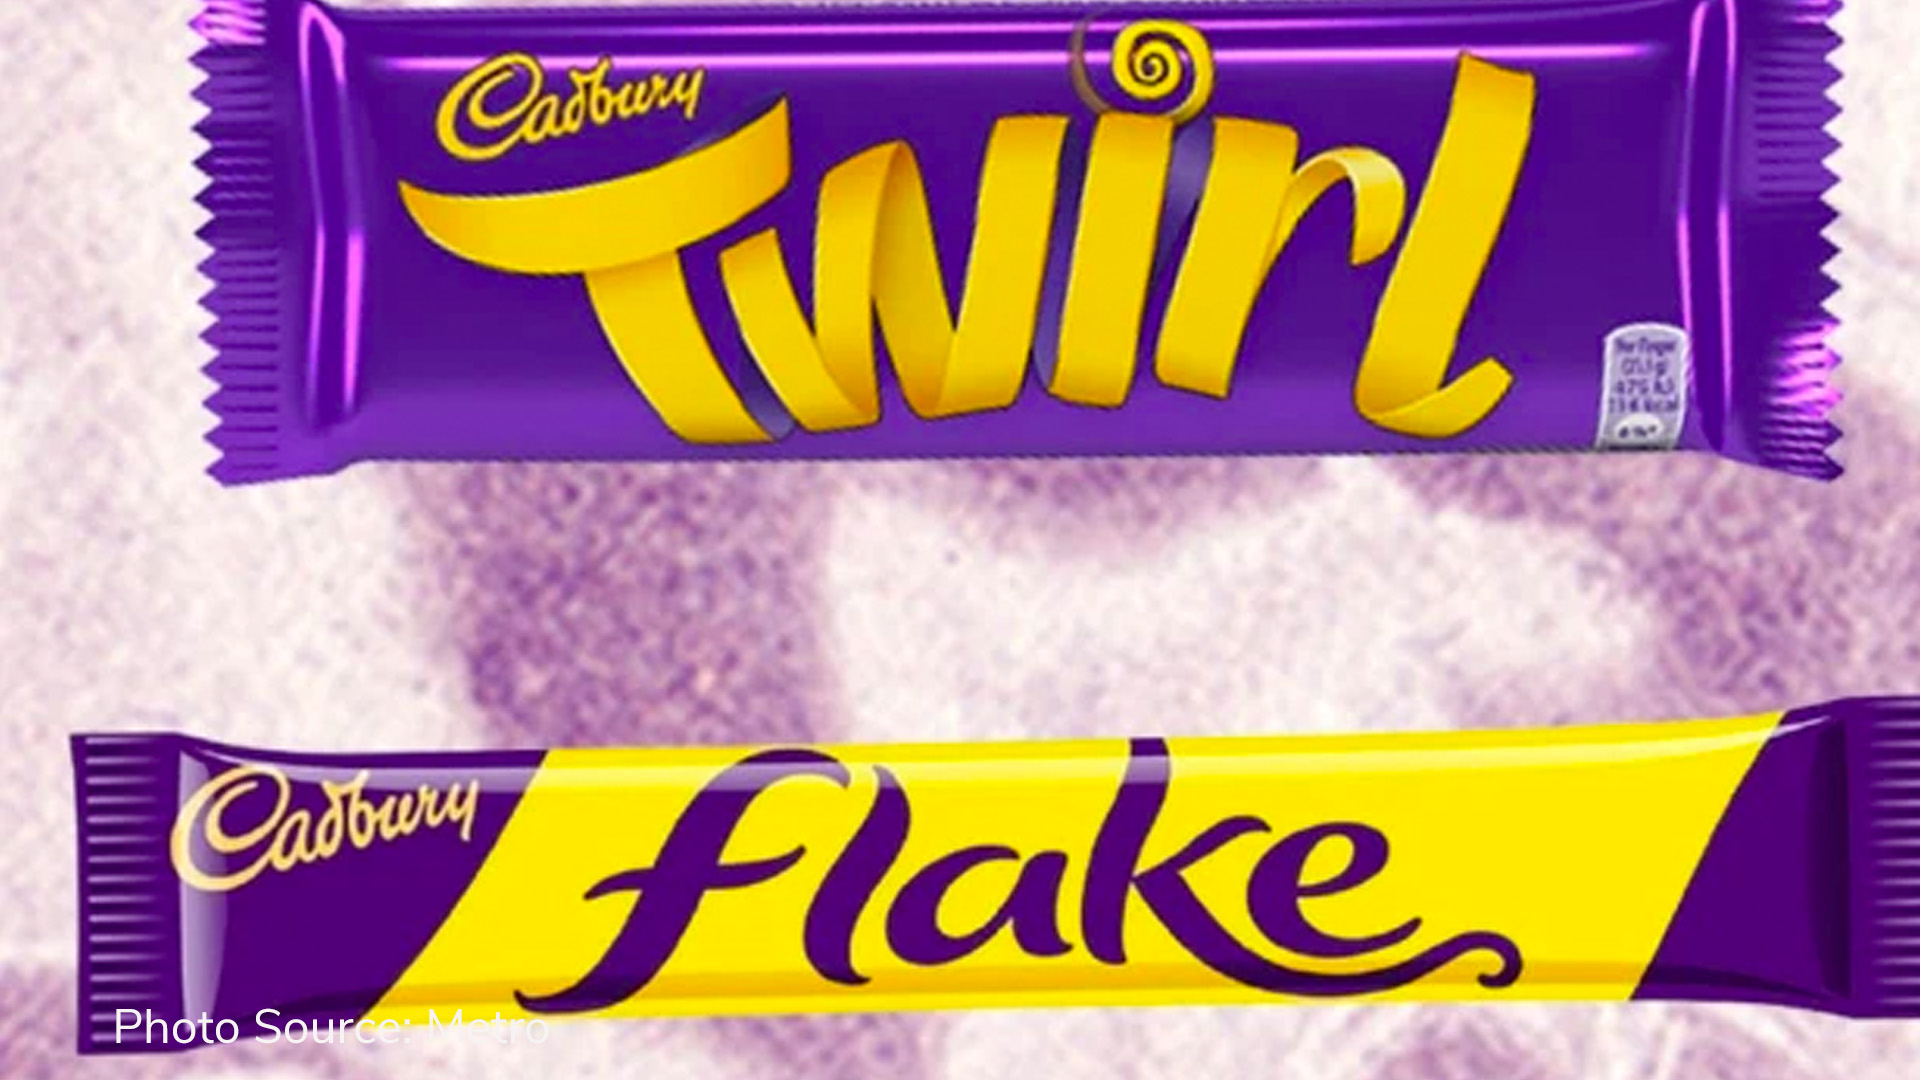 Huge debate on whether Twirl and Flake are the same chocolate bar